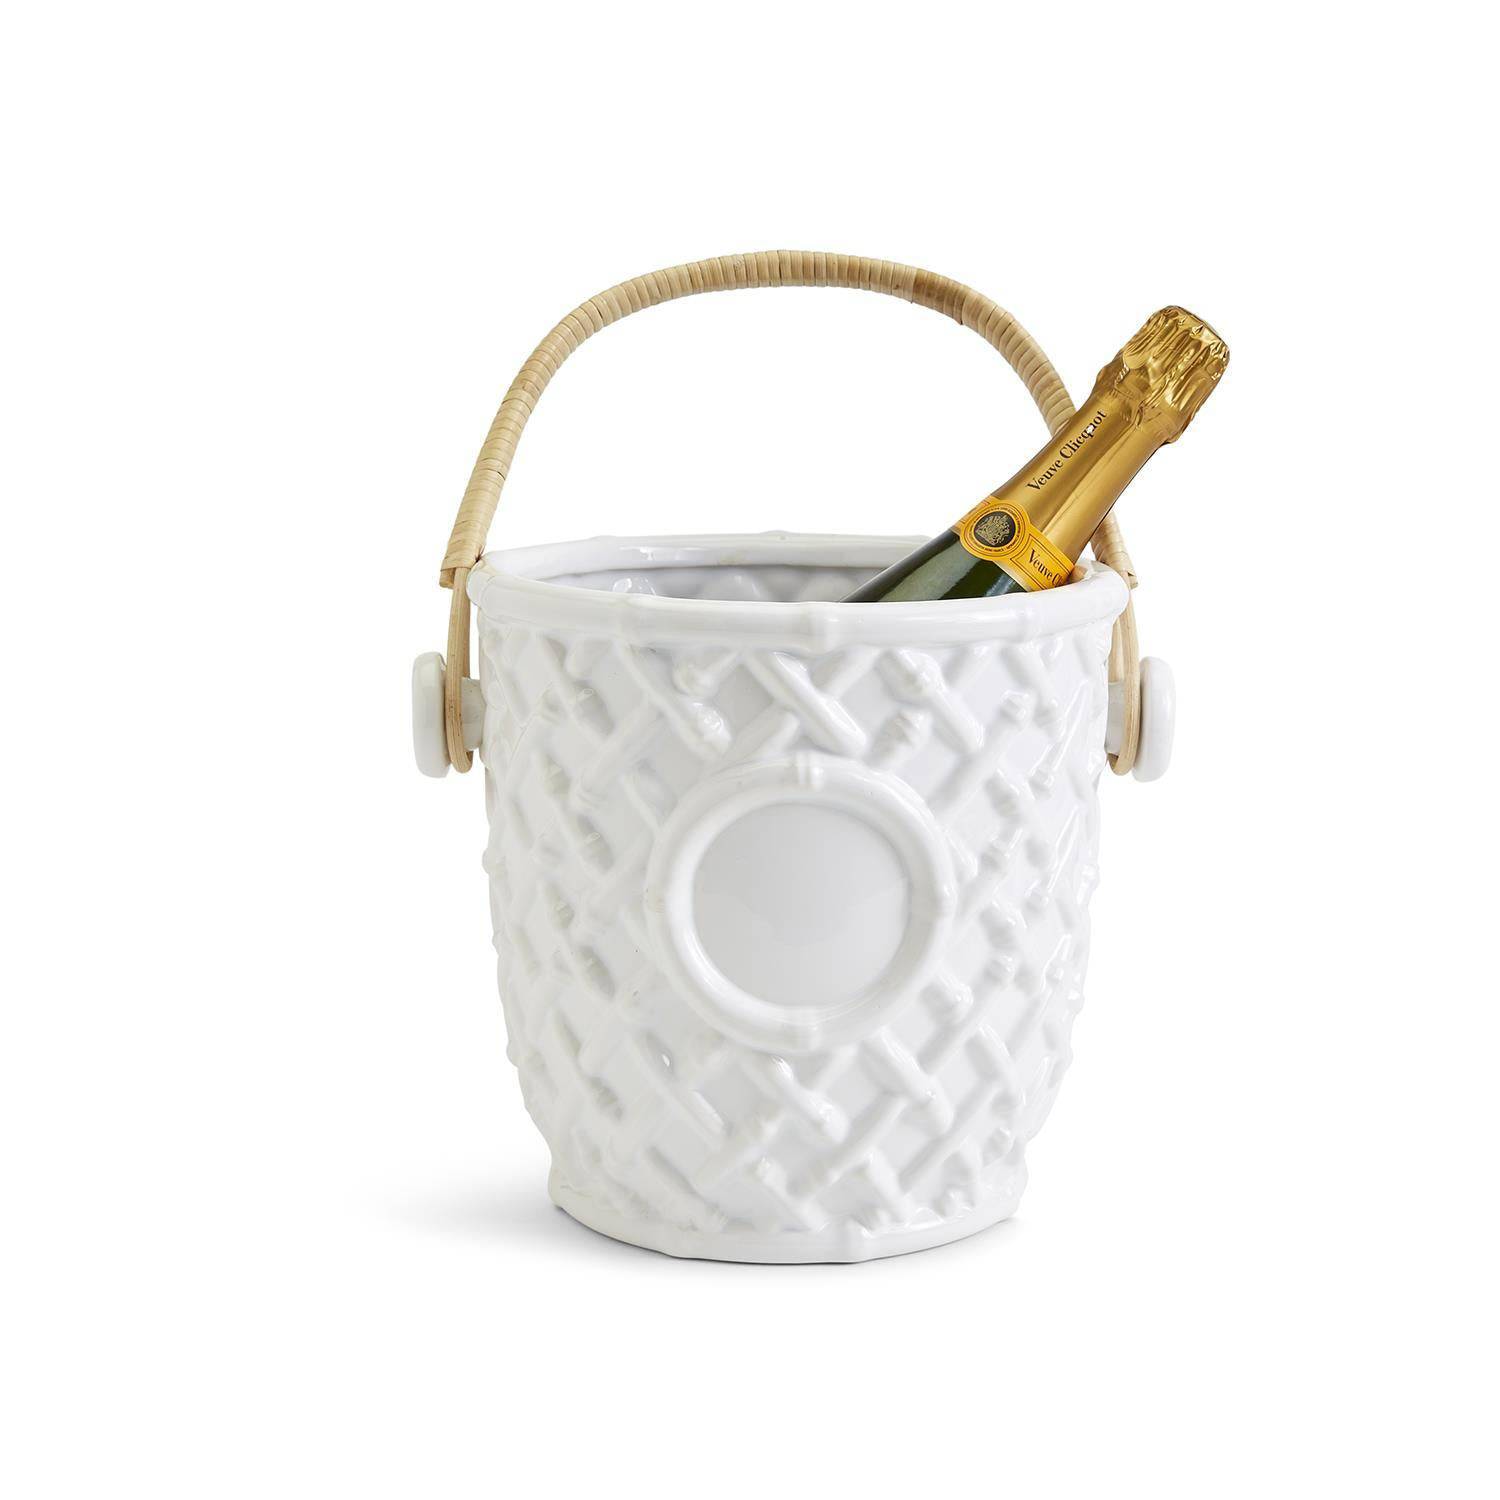 Faux Bamboo Fretwork Champagne/Wine Bucket - The Preppy Bunny